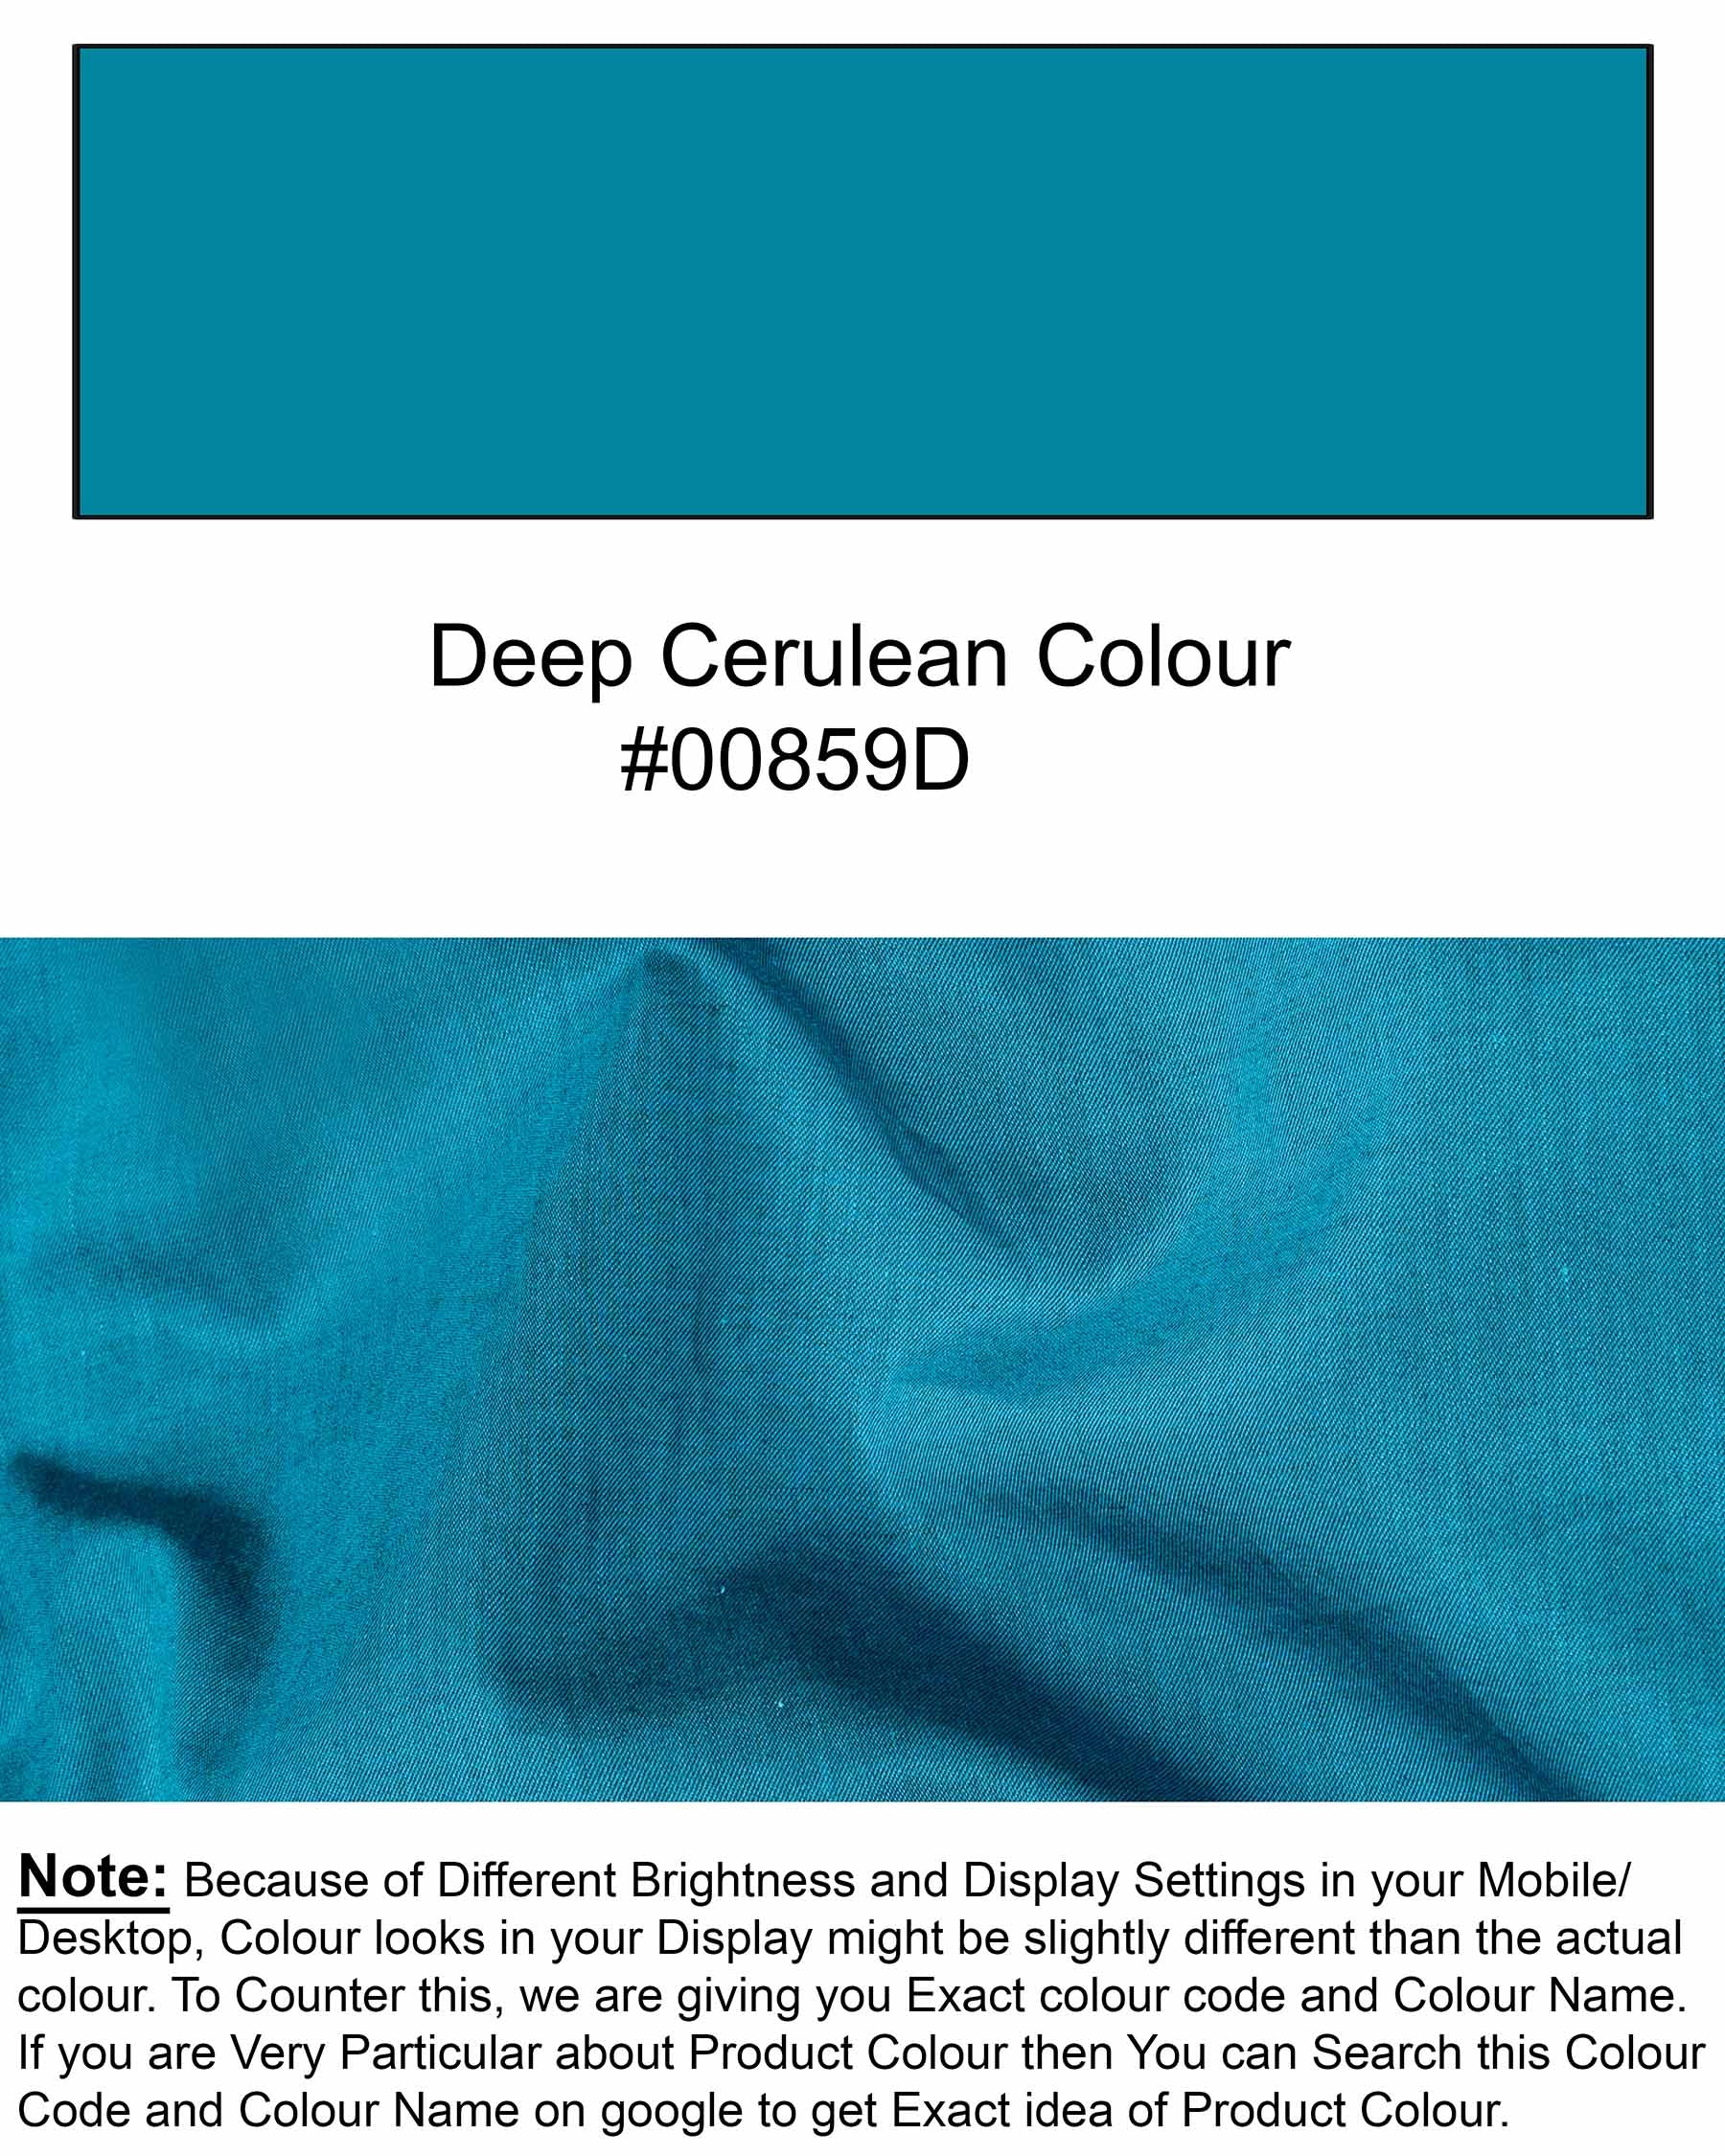 Deep Cerulean Blue Chambray Textured Premium Cotton Shirt